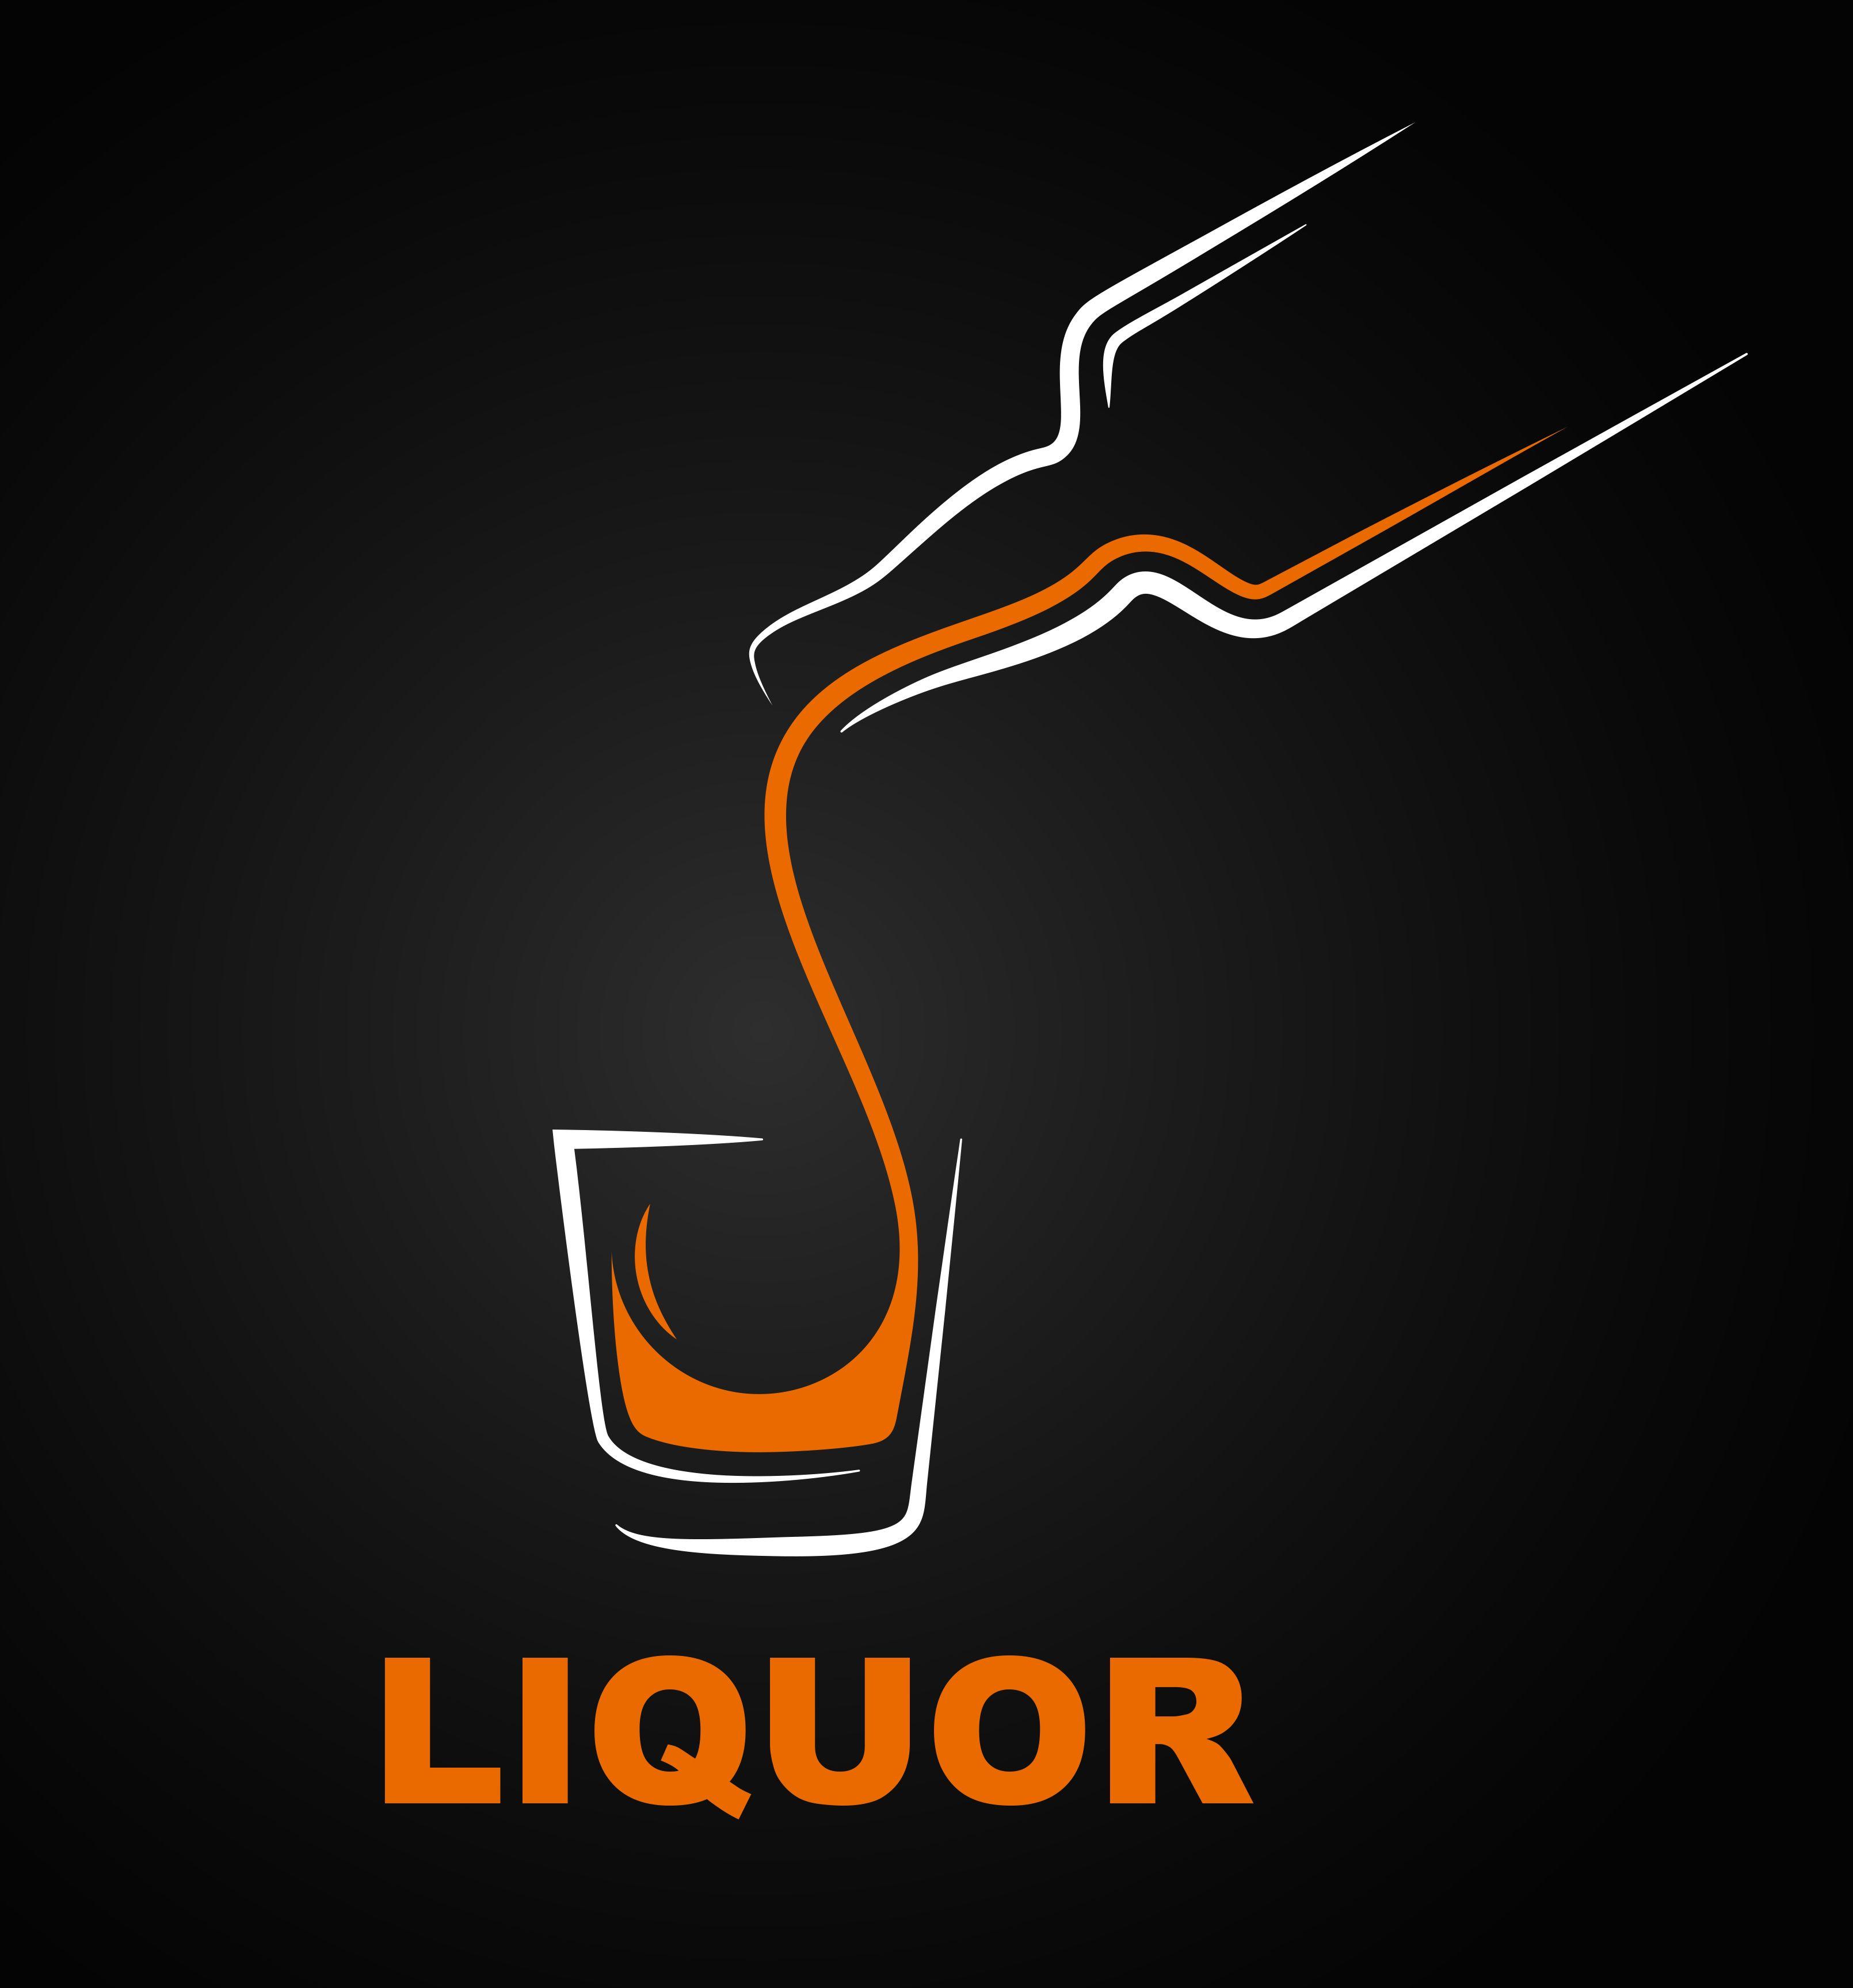 All Liquor Logo - Las Vegas Liquor Outlet. Liquor Wine and Beer